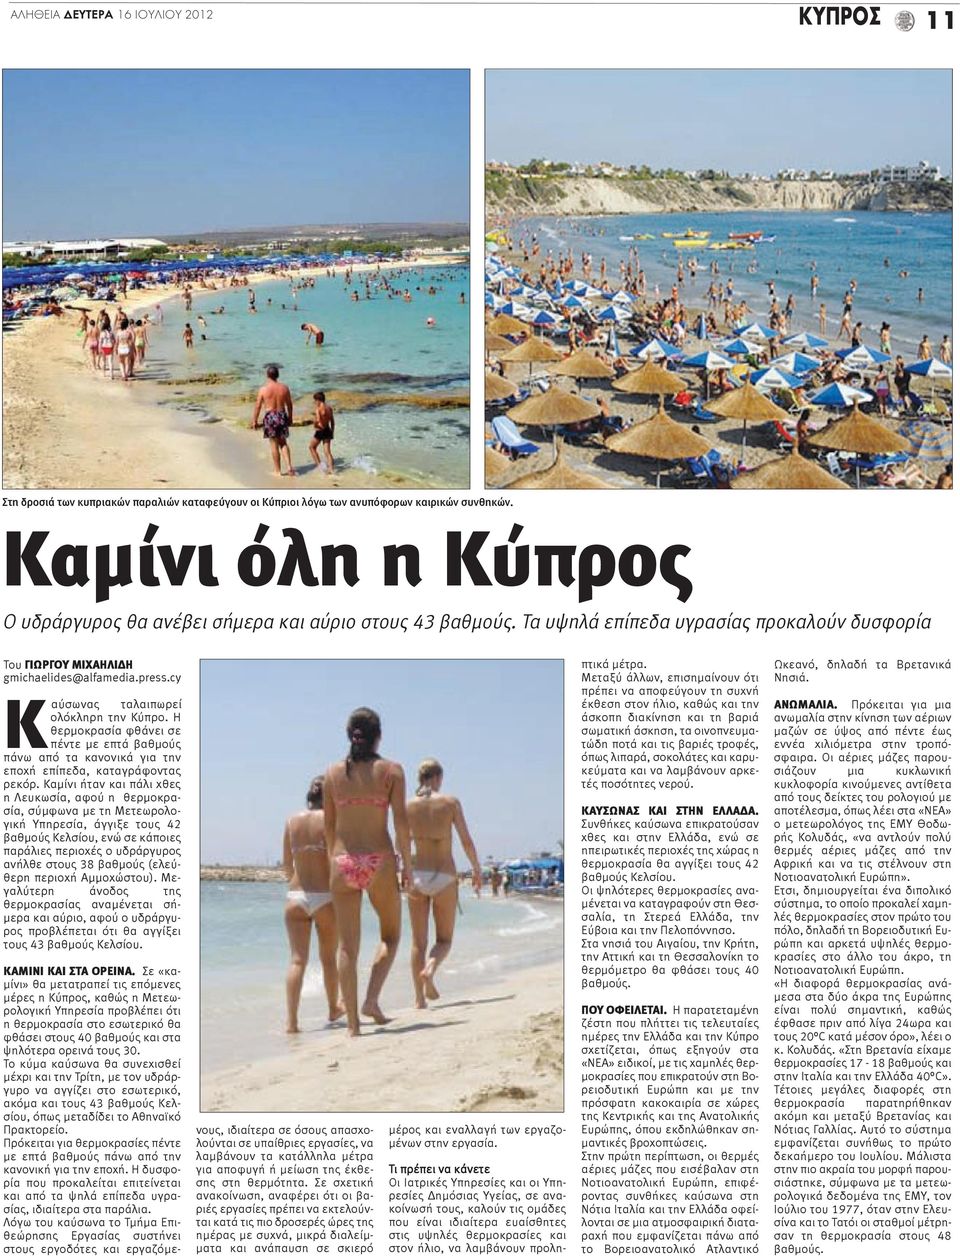 cy Καύσωνας ταλαιπωρεί ολόκληρη την Κύπρο. Η θερμοκρασία φθάνει σε πέντε με επτά βαθμούς πάνω από τα κανονικά για την εποχή επίπεδα, καταγράφοντας ρεκόρ.